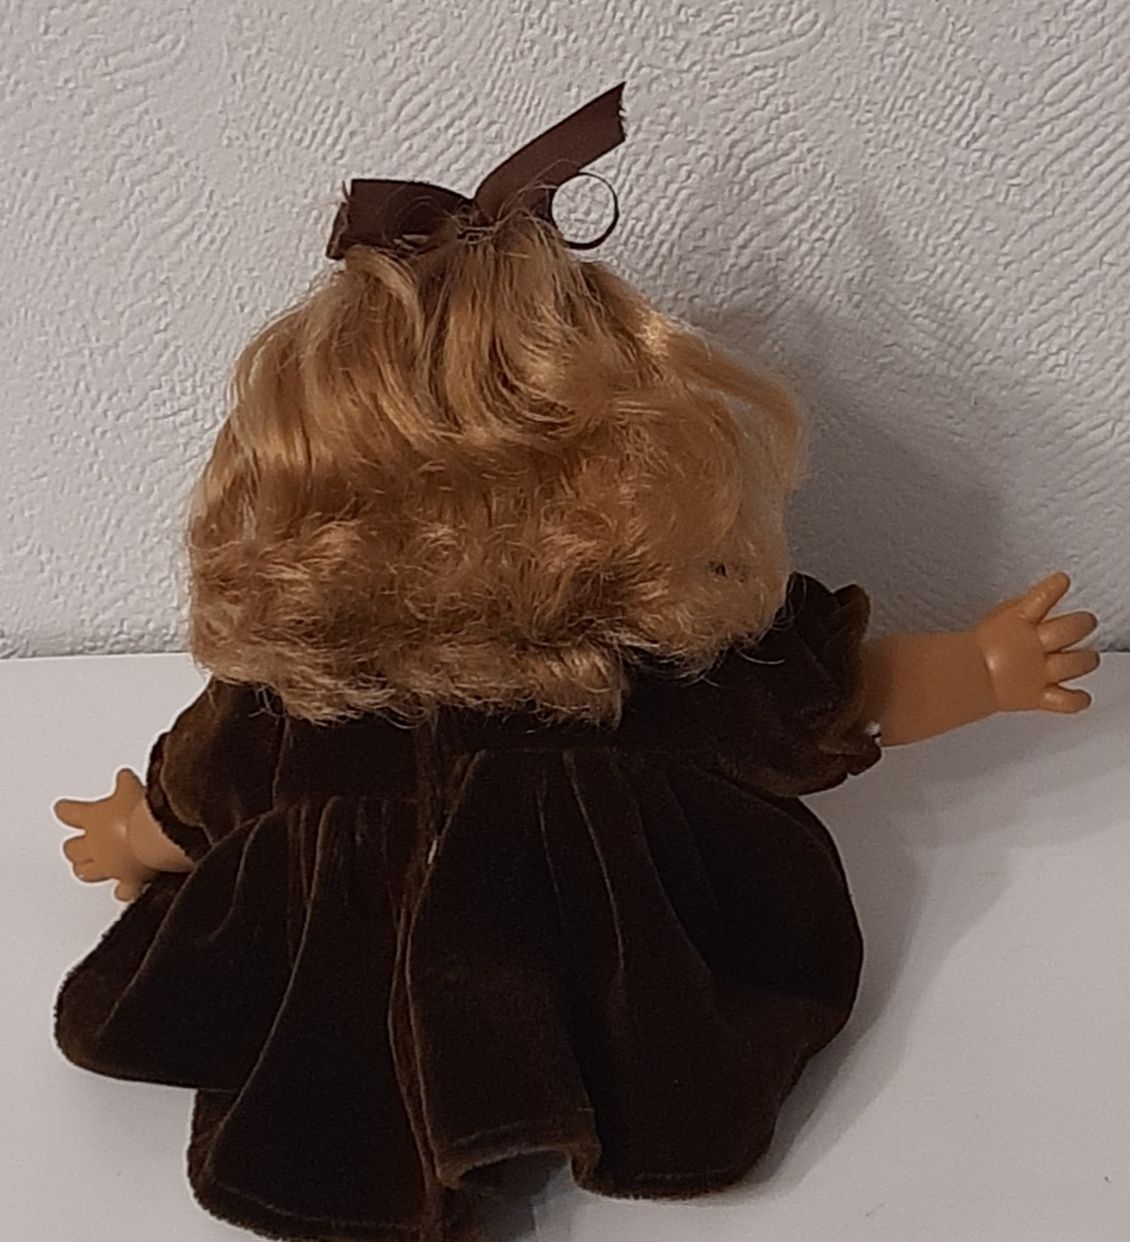 Коллекционная характерная кукла Panre Испания, 1990 годы, 26 см